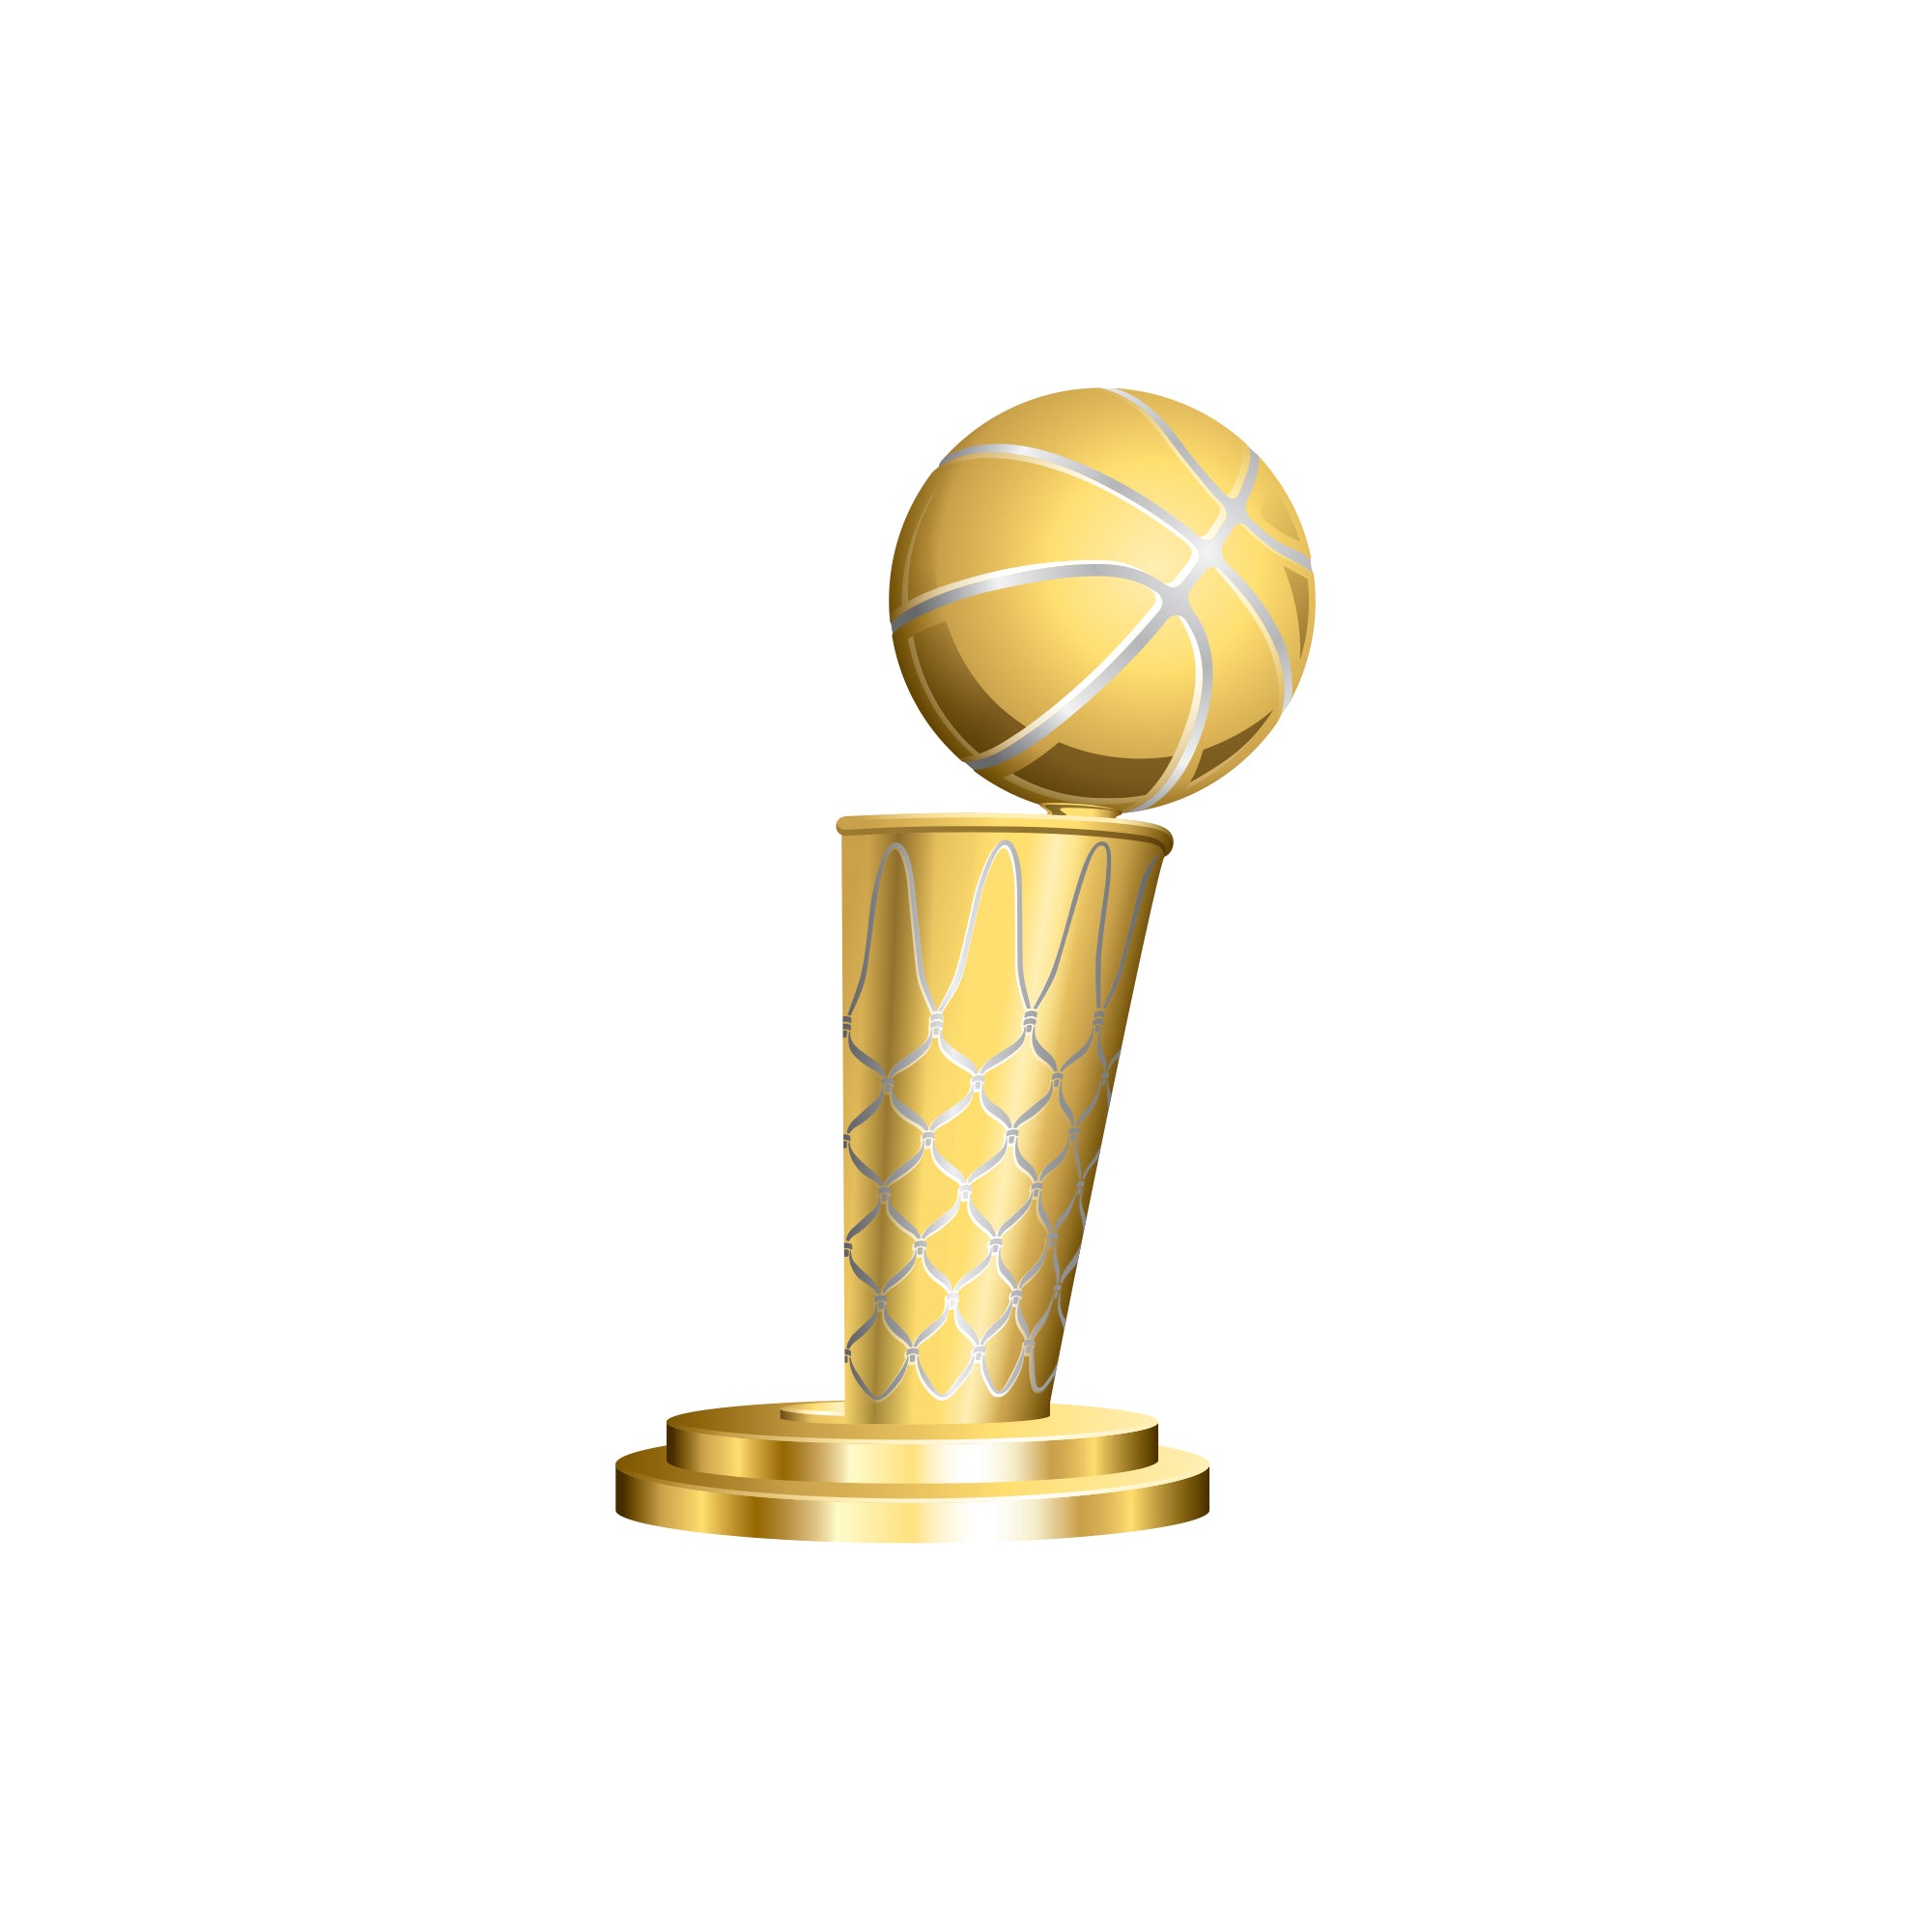 nba championship trophy